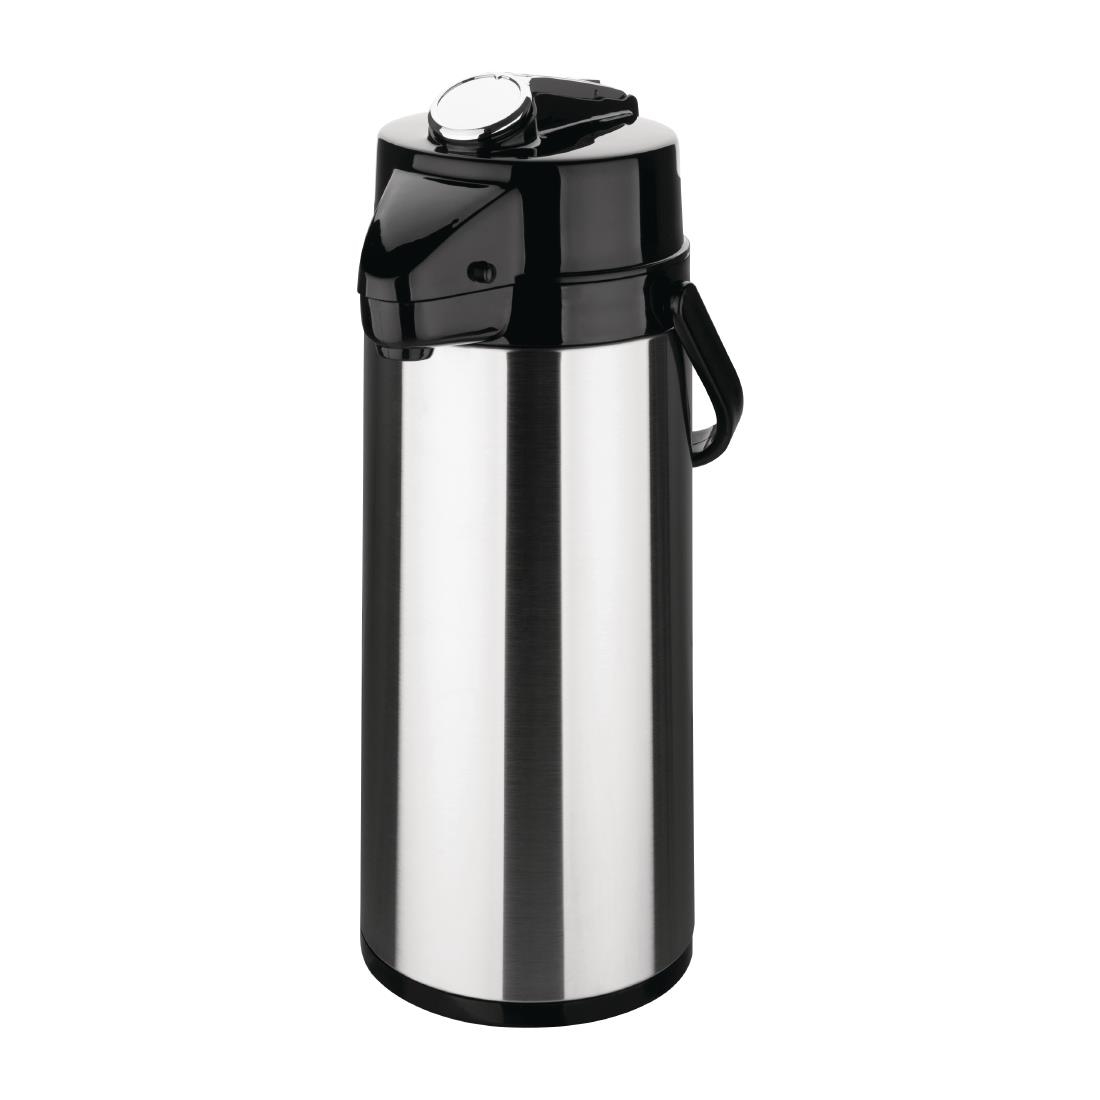 Buffalo Airpot Filter Coffee Maker (CW306)